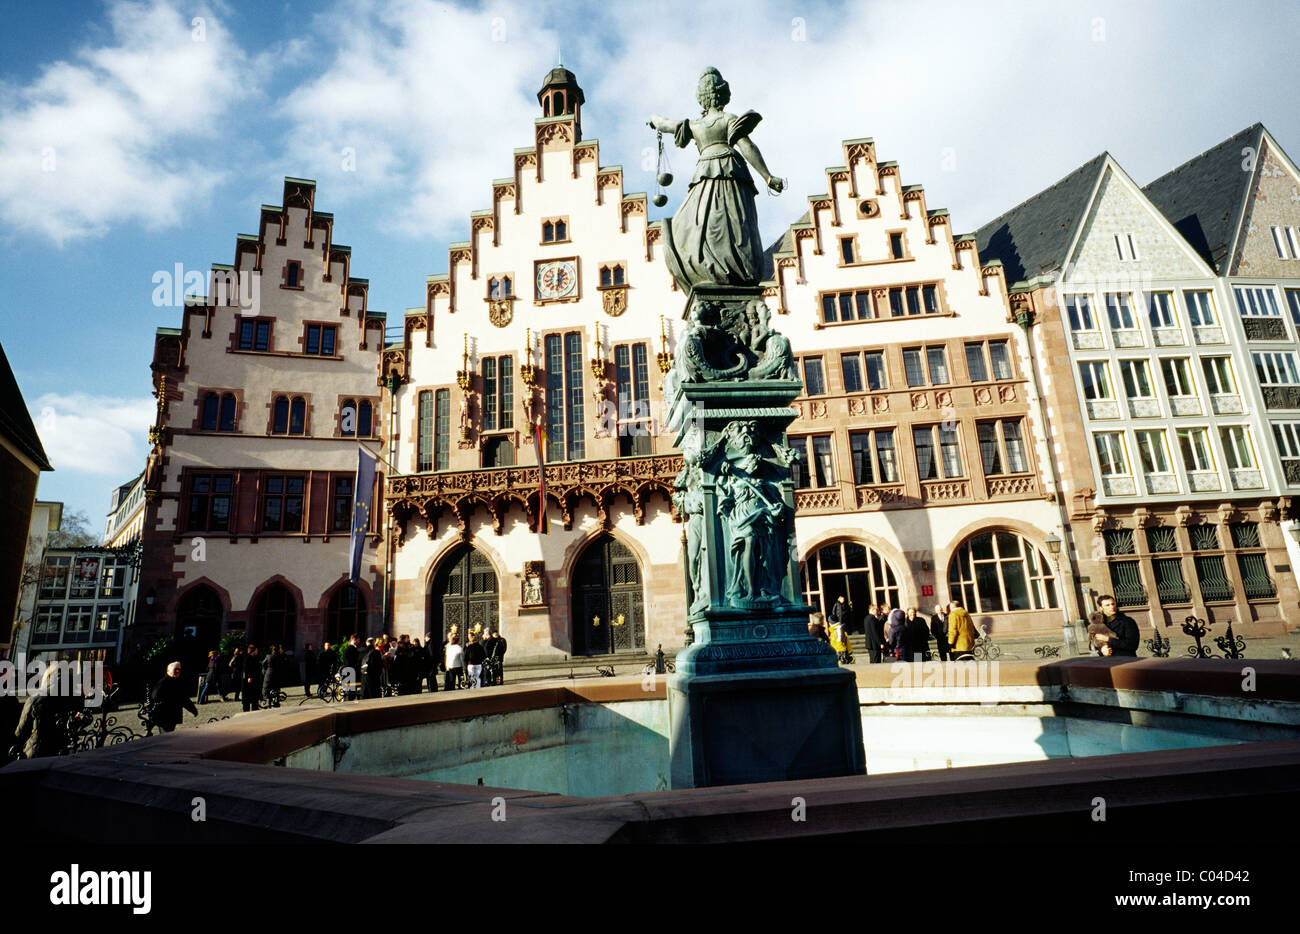 Medieval Germany - Well of Justice (Gerechtigkeitsbrunnen) in front of Römer city hall at Römerberg in Frankfurt am Main. Stock Photo